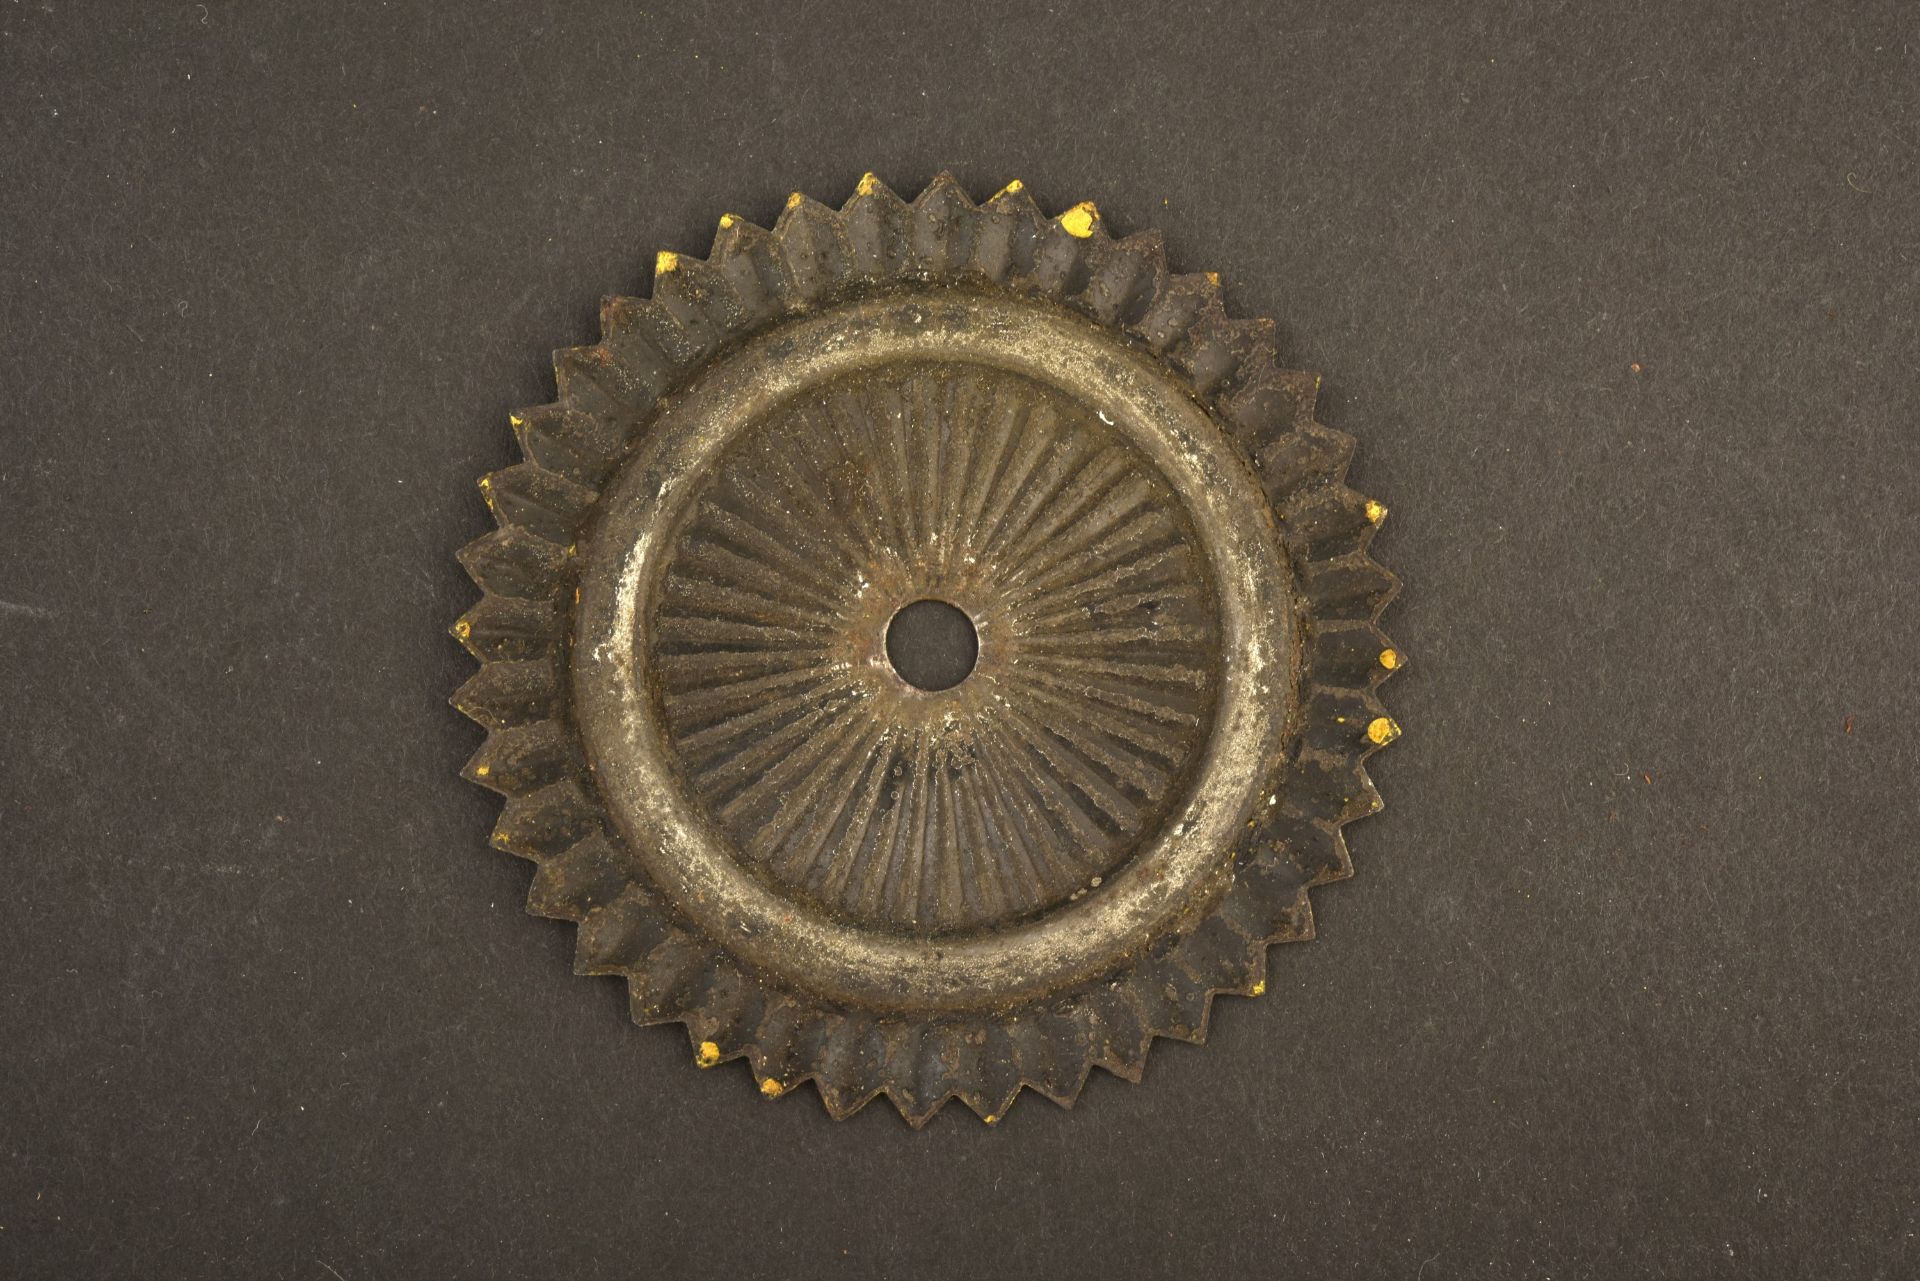 Cocarde modele 1857 Reuss et Waldeck Pyrmont. Reuss or Waldeck-Pyrmont pattern 1857 spiked helmet co - Image 2 of 2